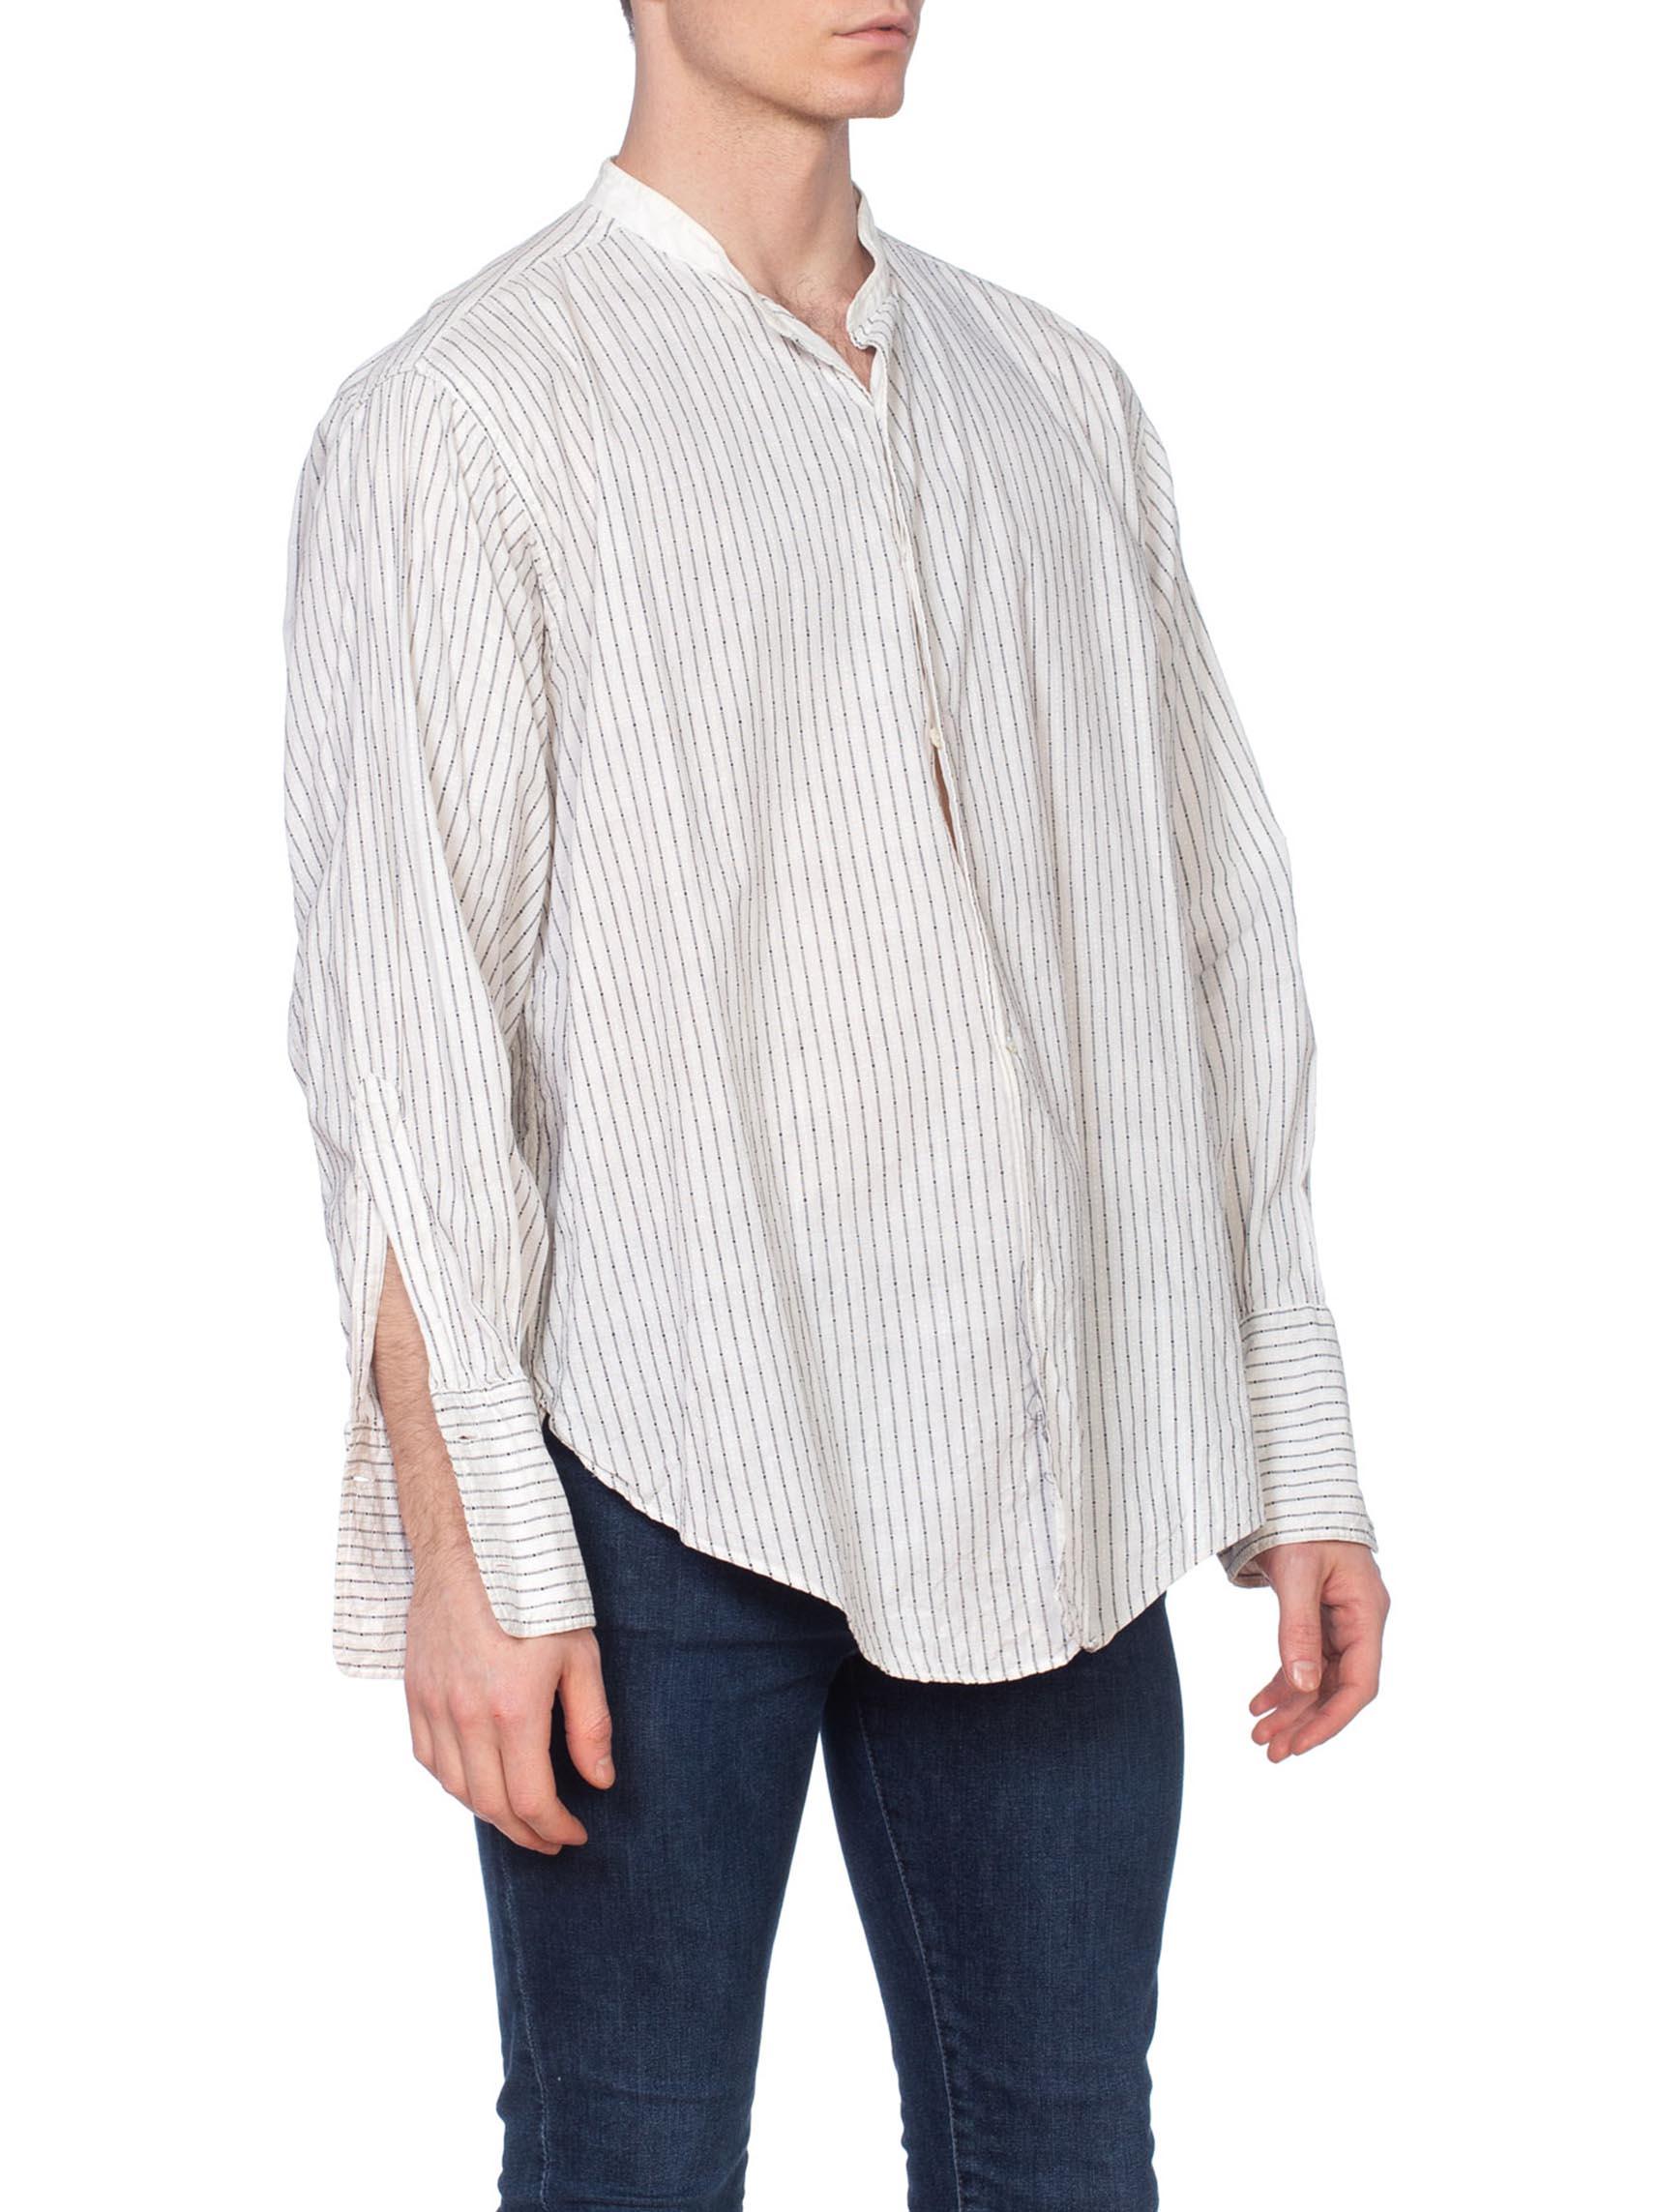 pinstripe white shirt